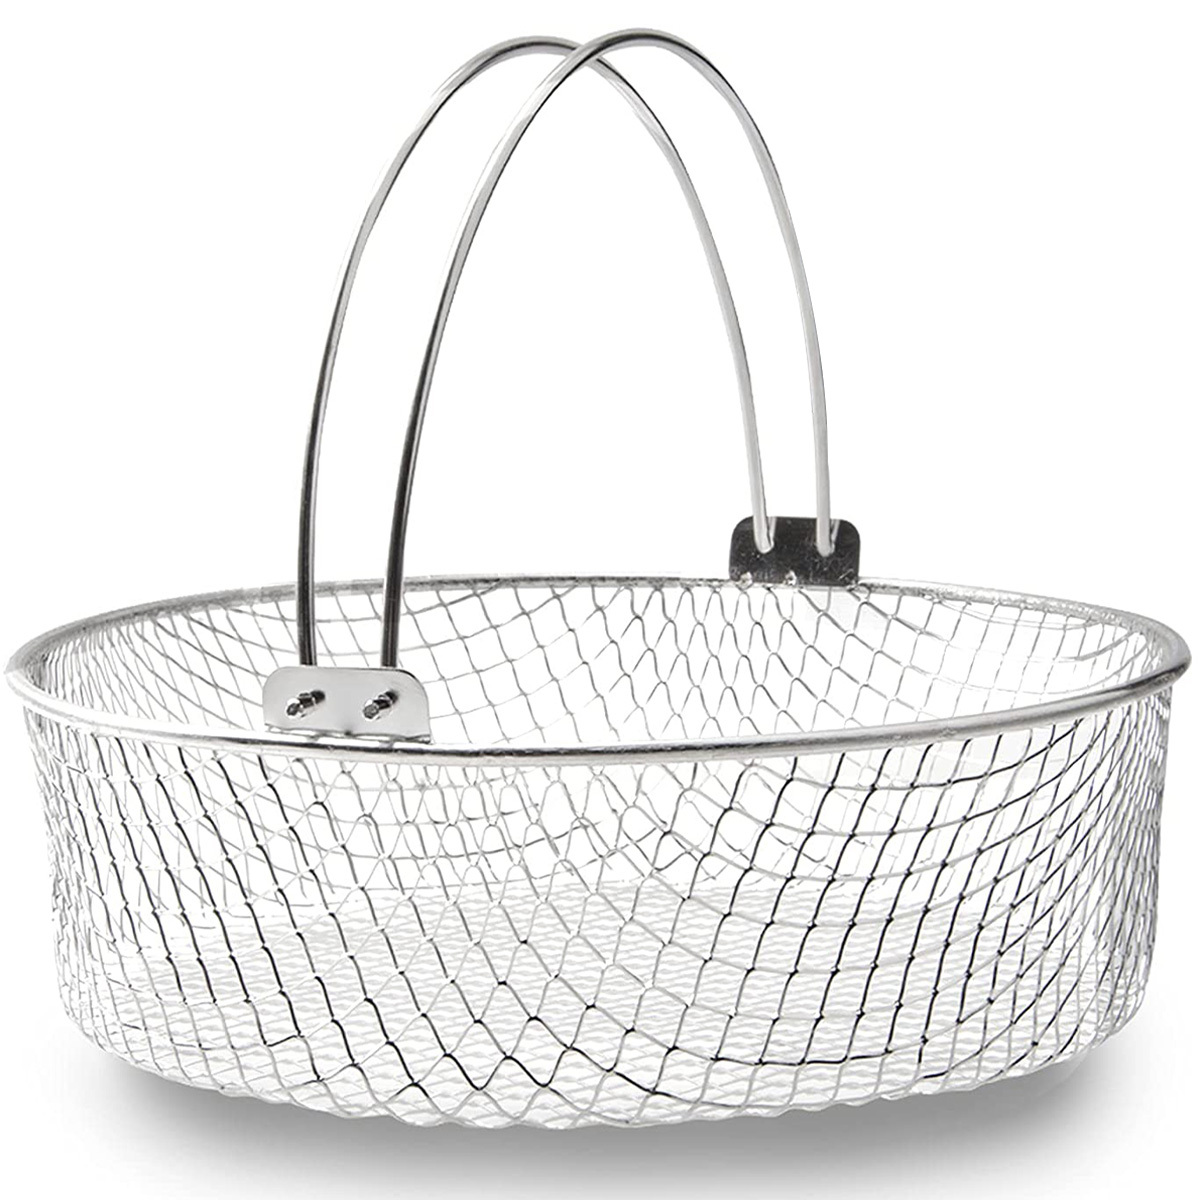 Air Fryer Basket, Steamer Basket, 304 Stainless Steel Mesh Basket for Air  Fryer, Air Fryer Accessory 8 inch Basket with Handle: Home & Kitchen 